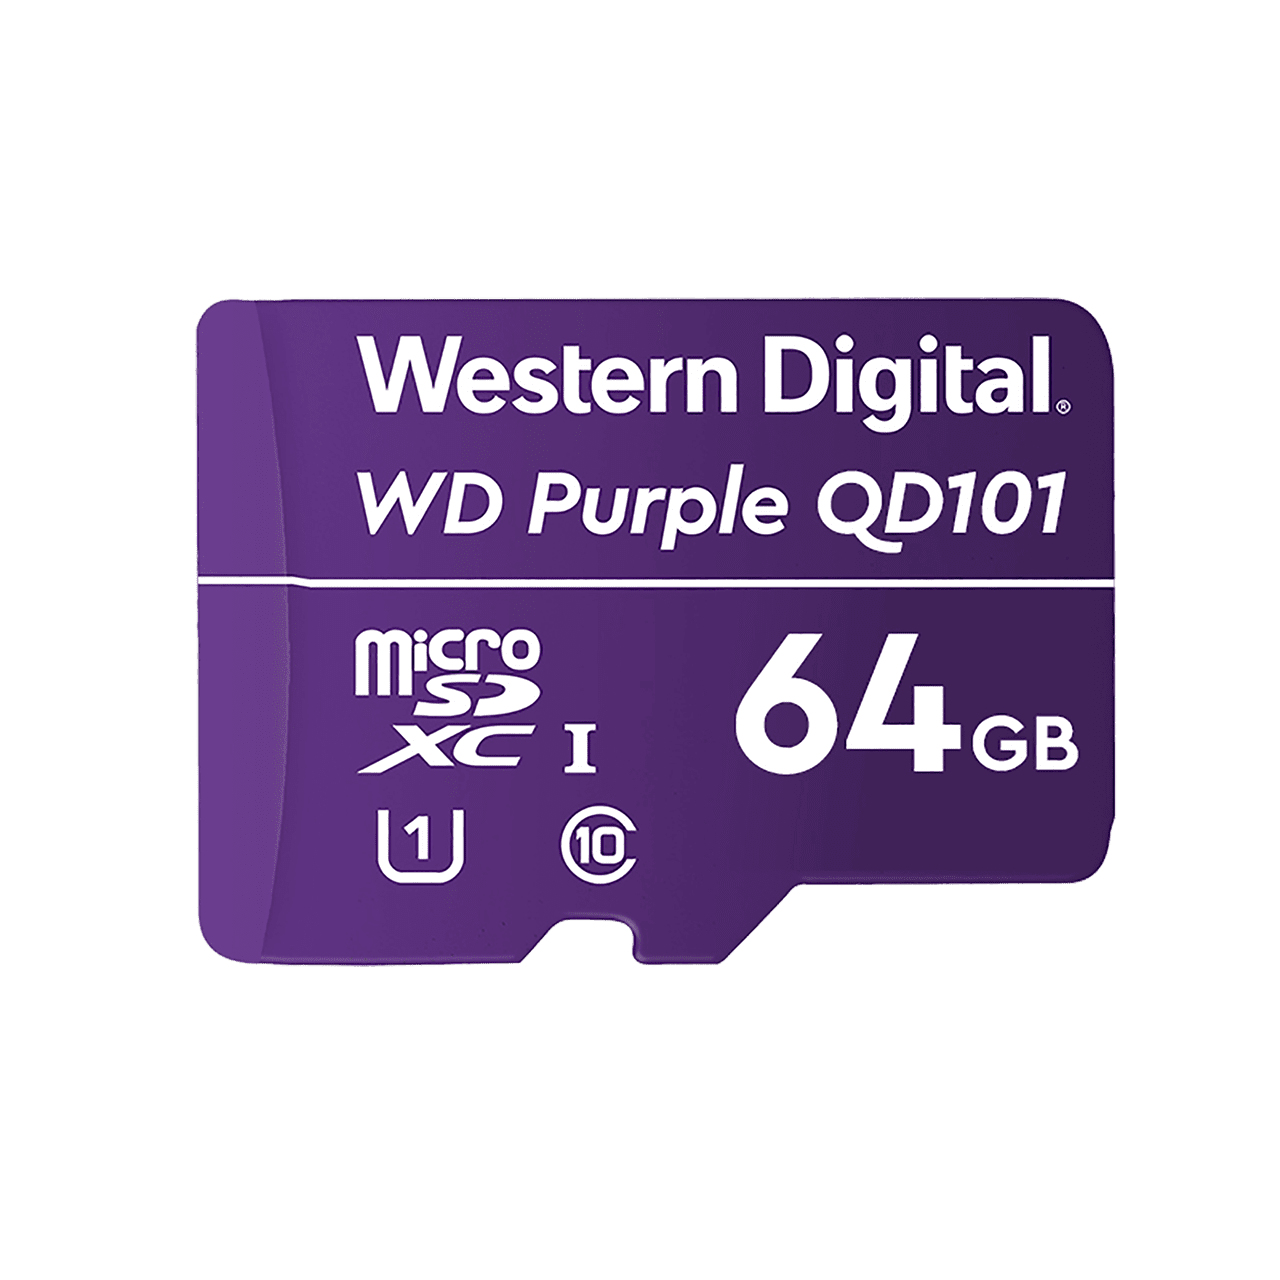 Memoria Micro Sd Wd Purple Sdxc 64Gb Cl10 U1 Qd101 (Wdd064G1P0C)